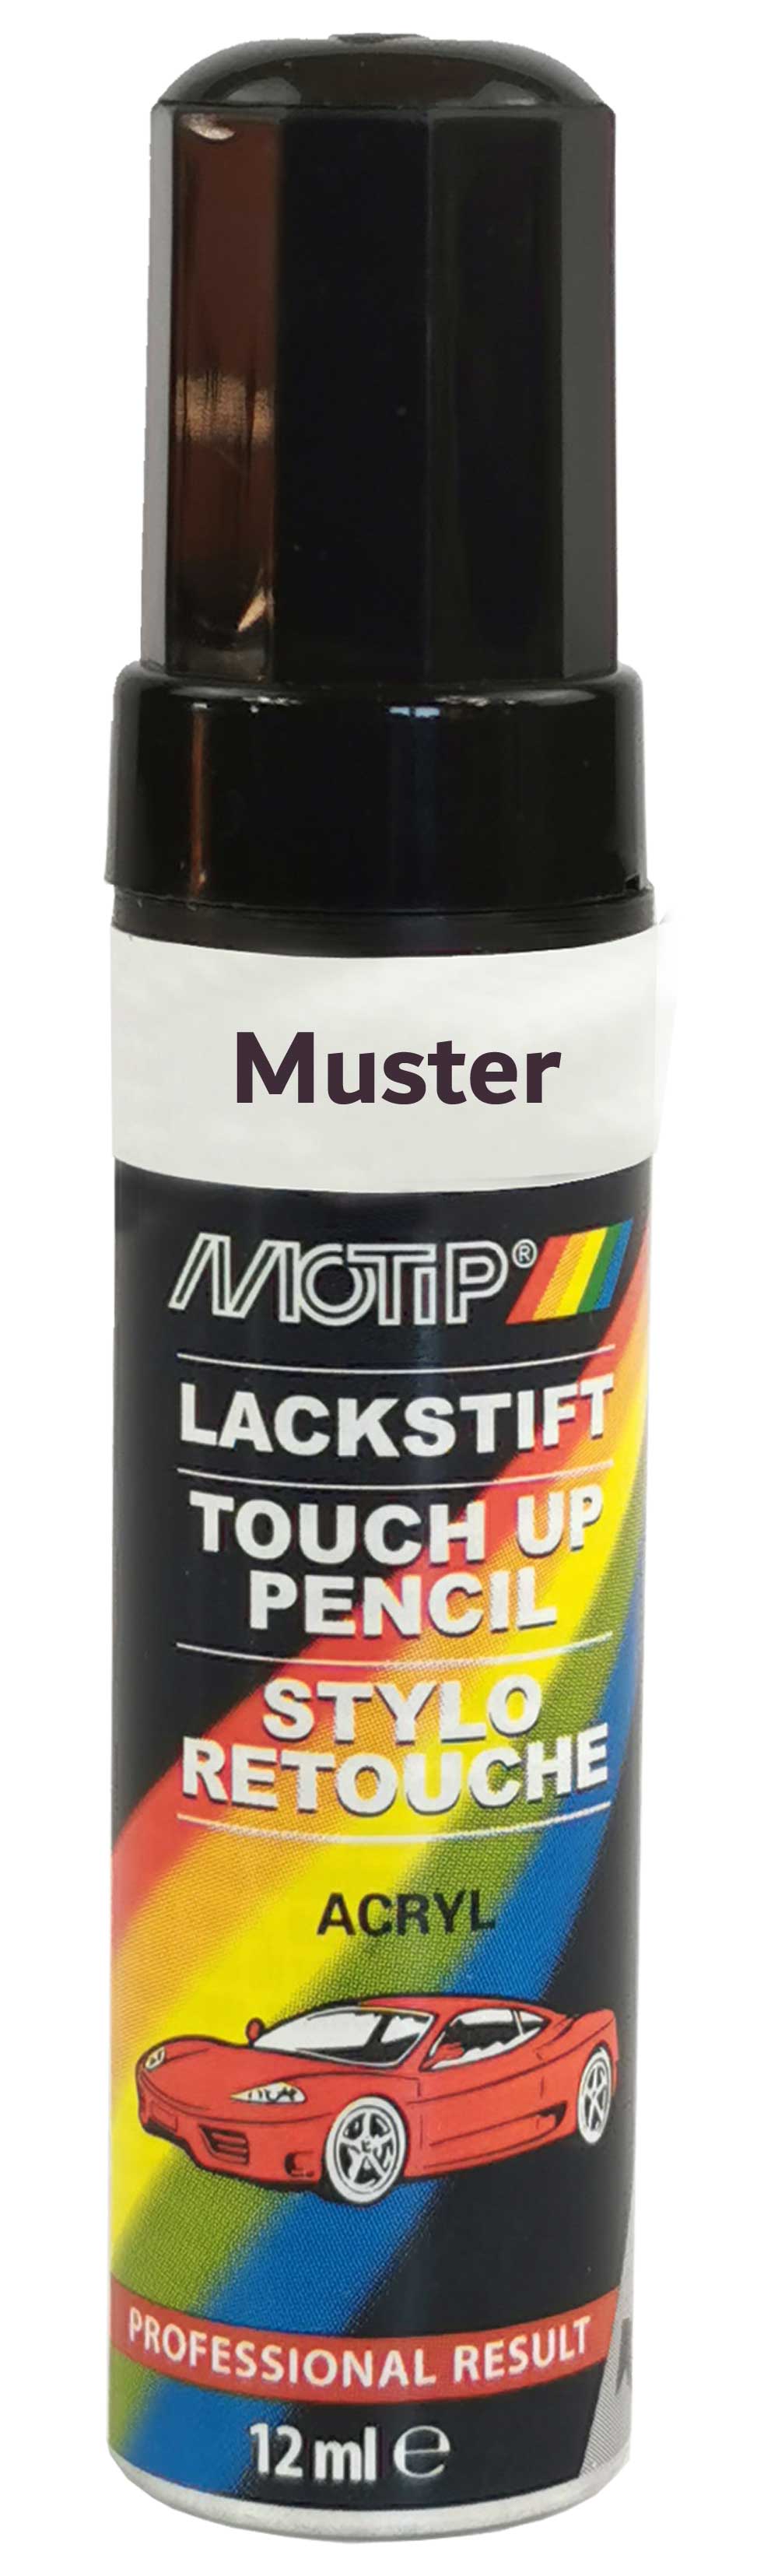 Motip Lack-Stift gold 12ml 952250